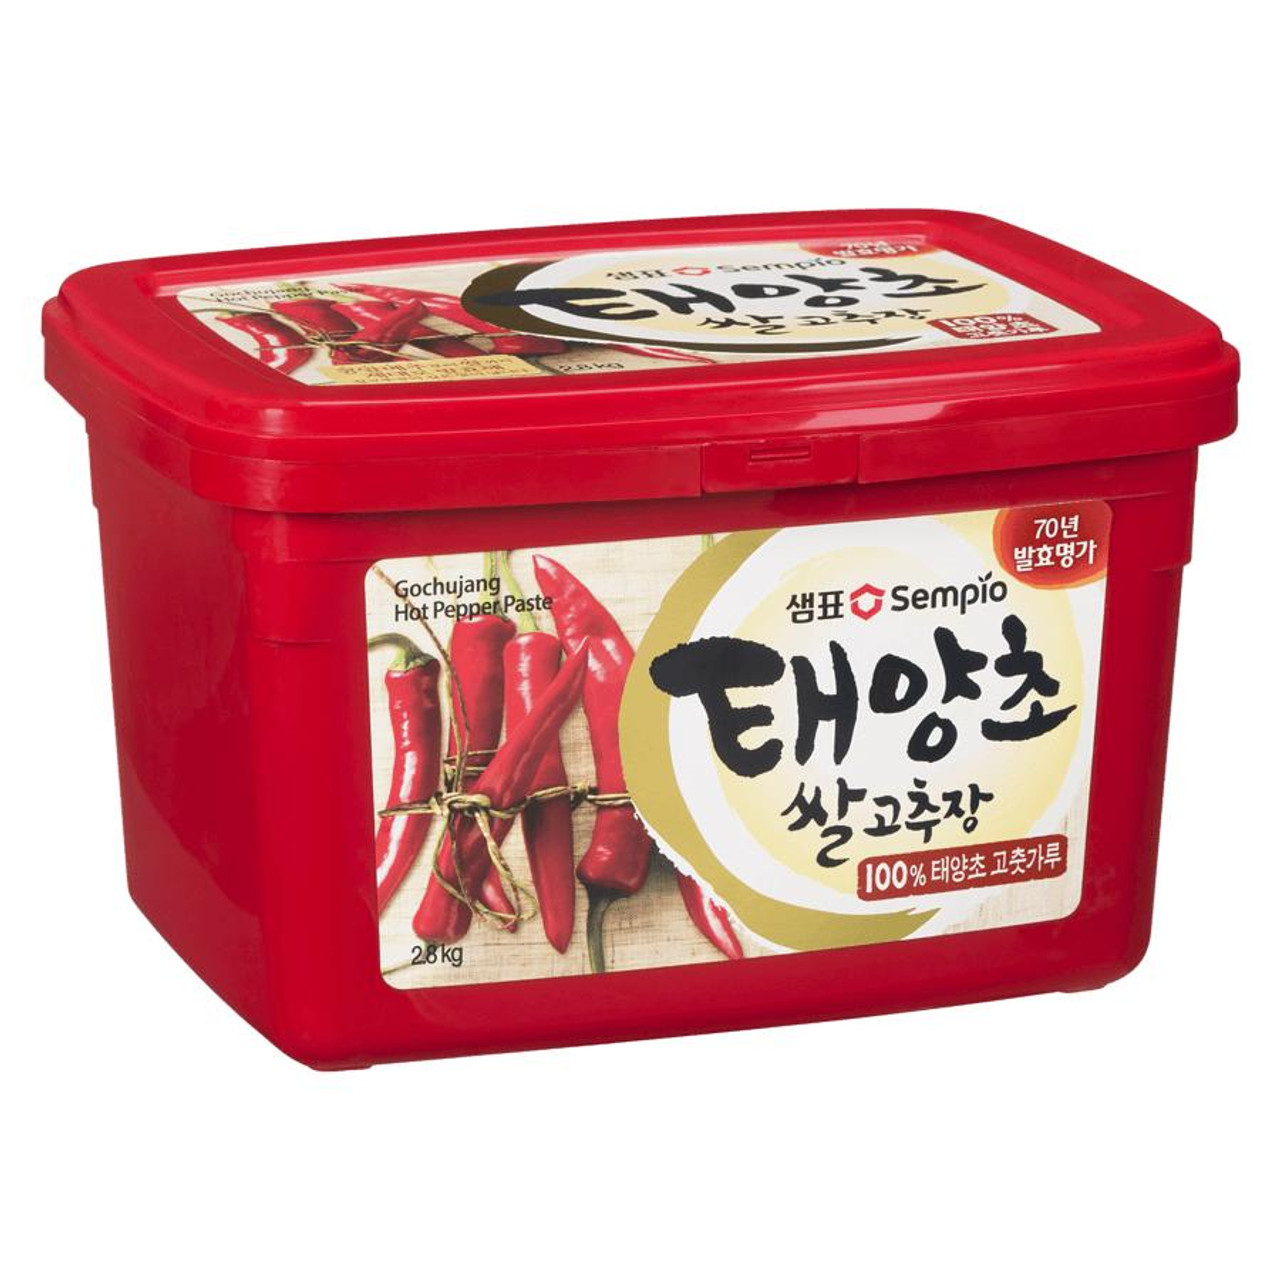 SEMPIO Sempio Gochujang Hot Pepper Paste (2.8 kg) - Authentic Korean Flavor, Spicy & Versatile 